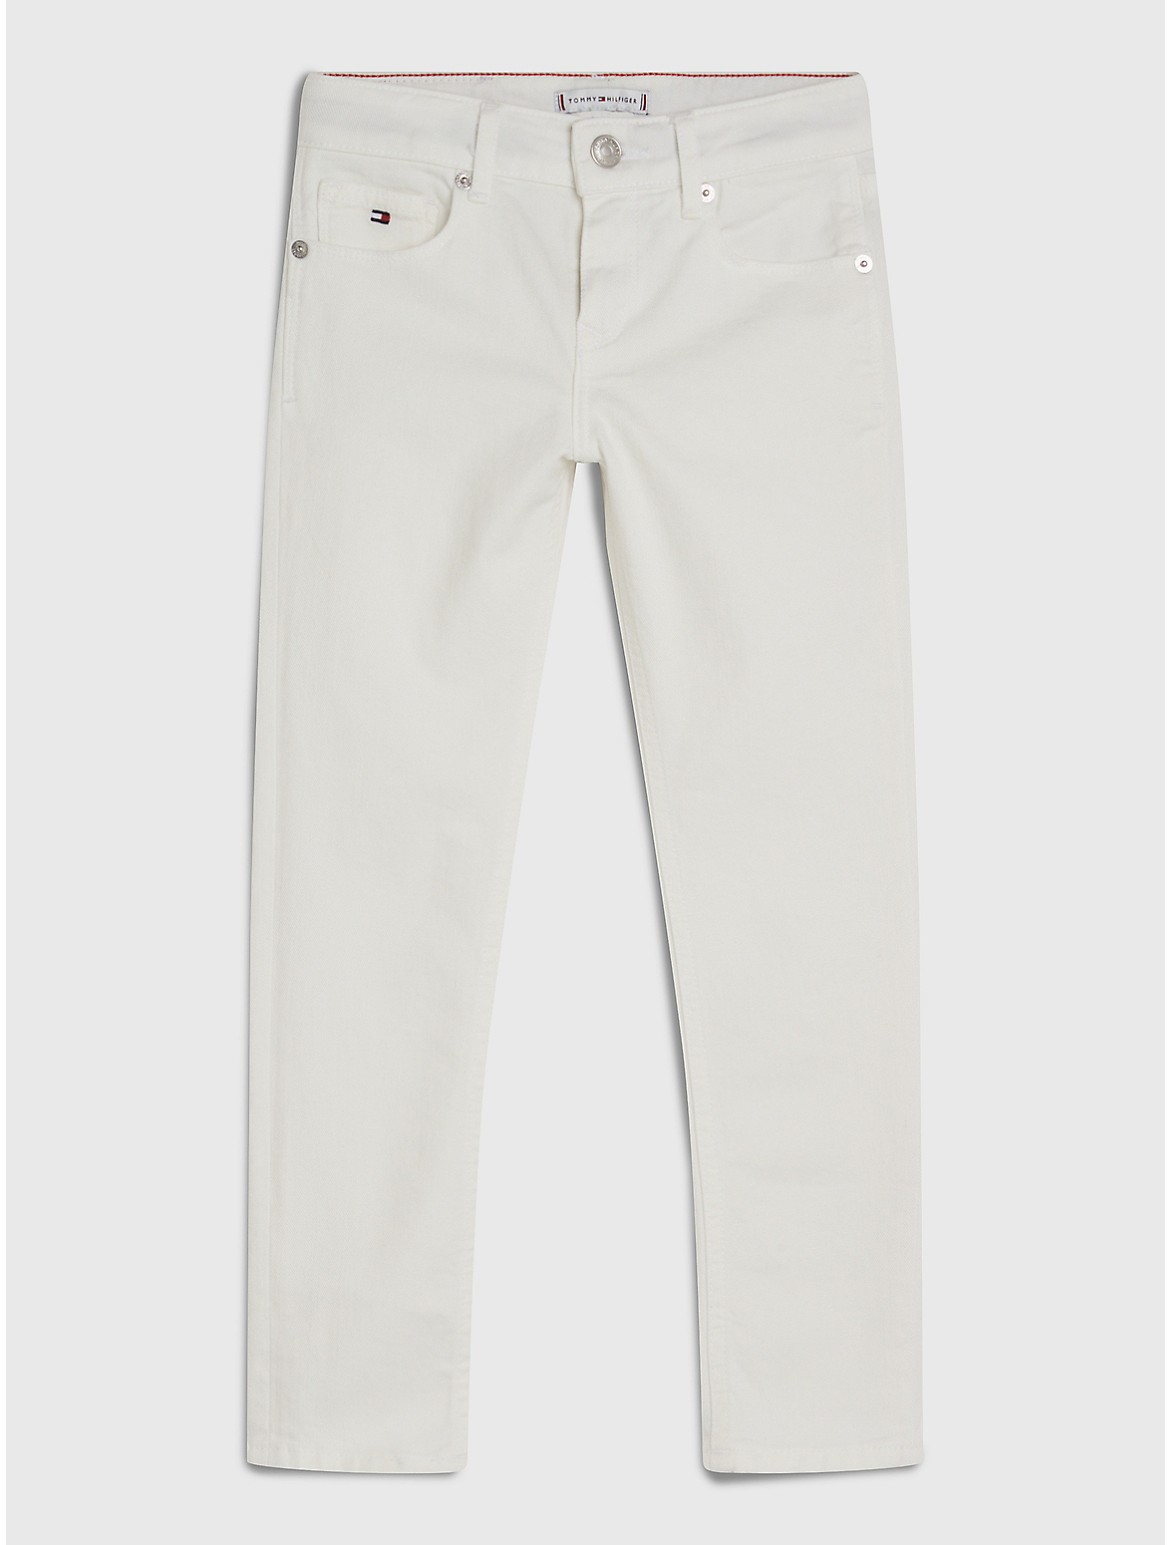 Tommy Hilfiger Girls' Kids' Stretch Skinny Fit White Jean